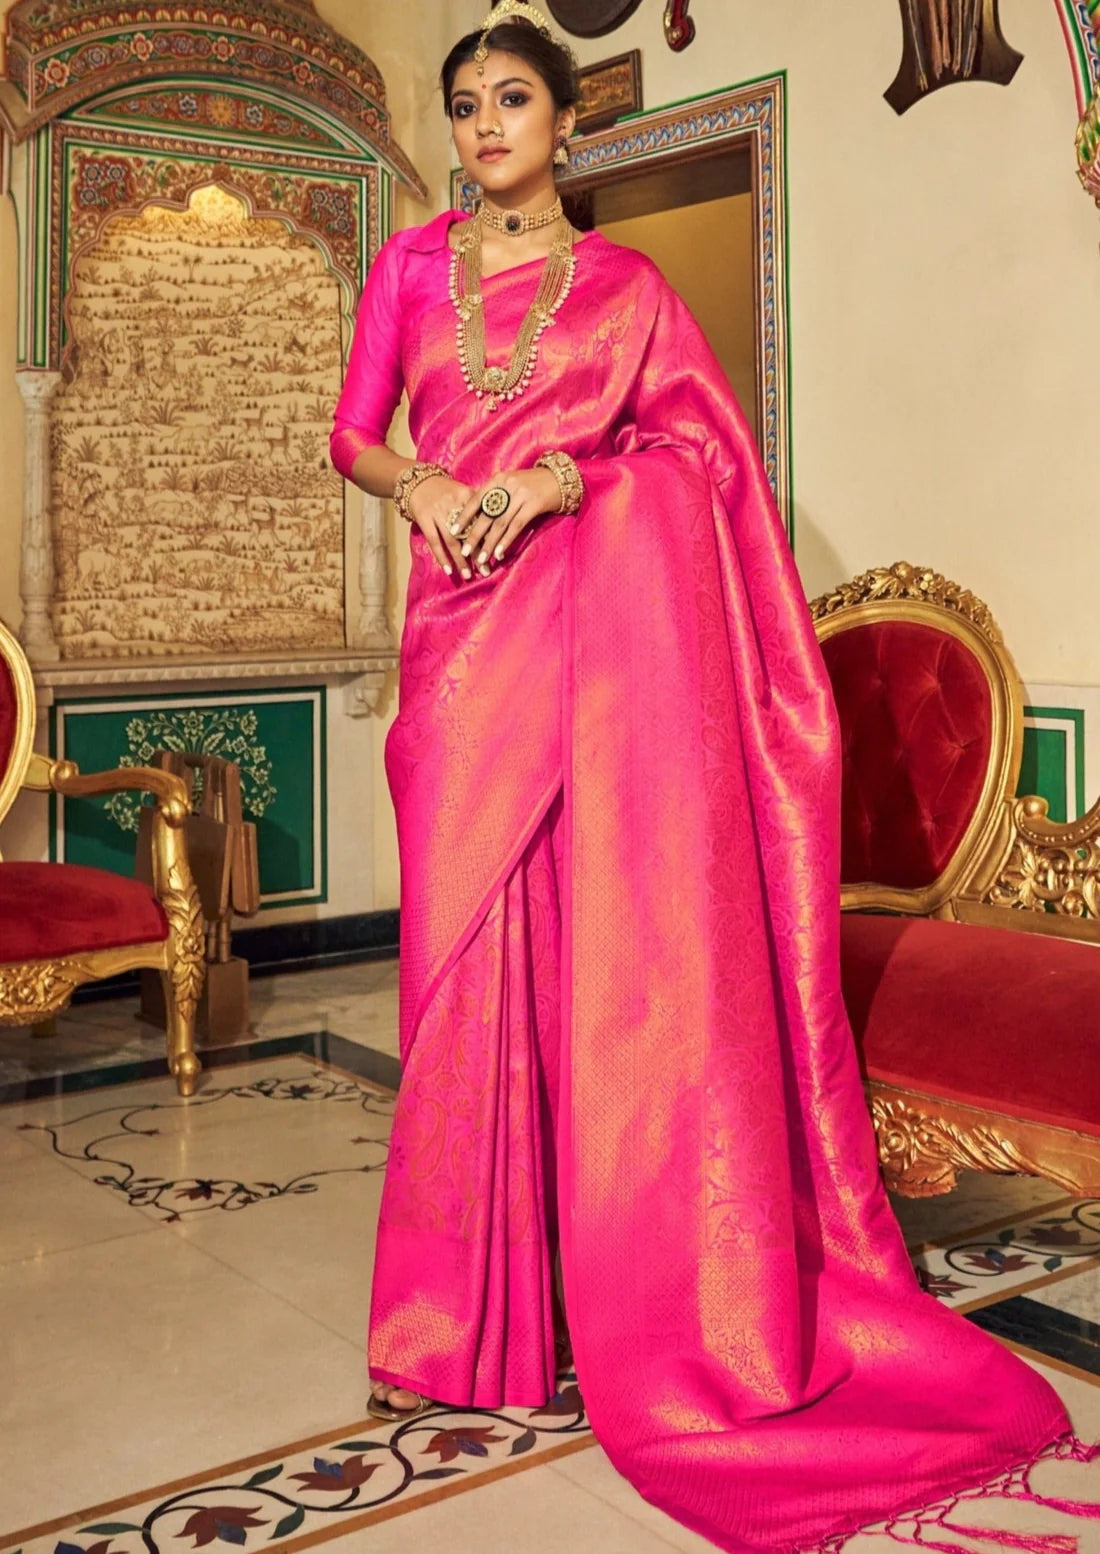 Handloom silk hot pink kanjeevaram bridal saree online shopping for bride india.